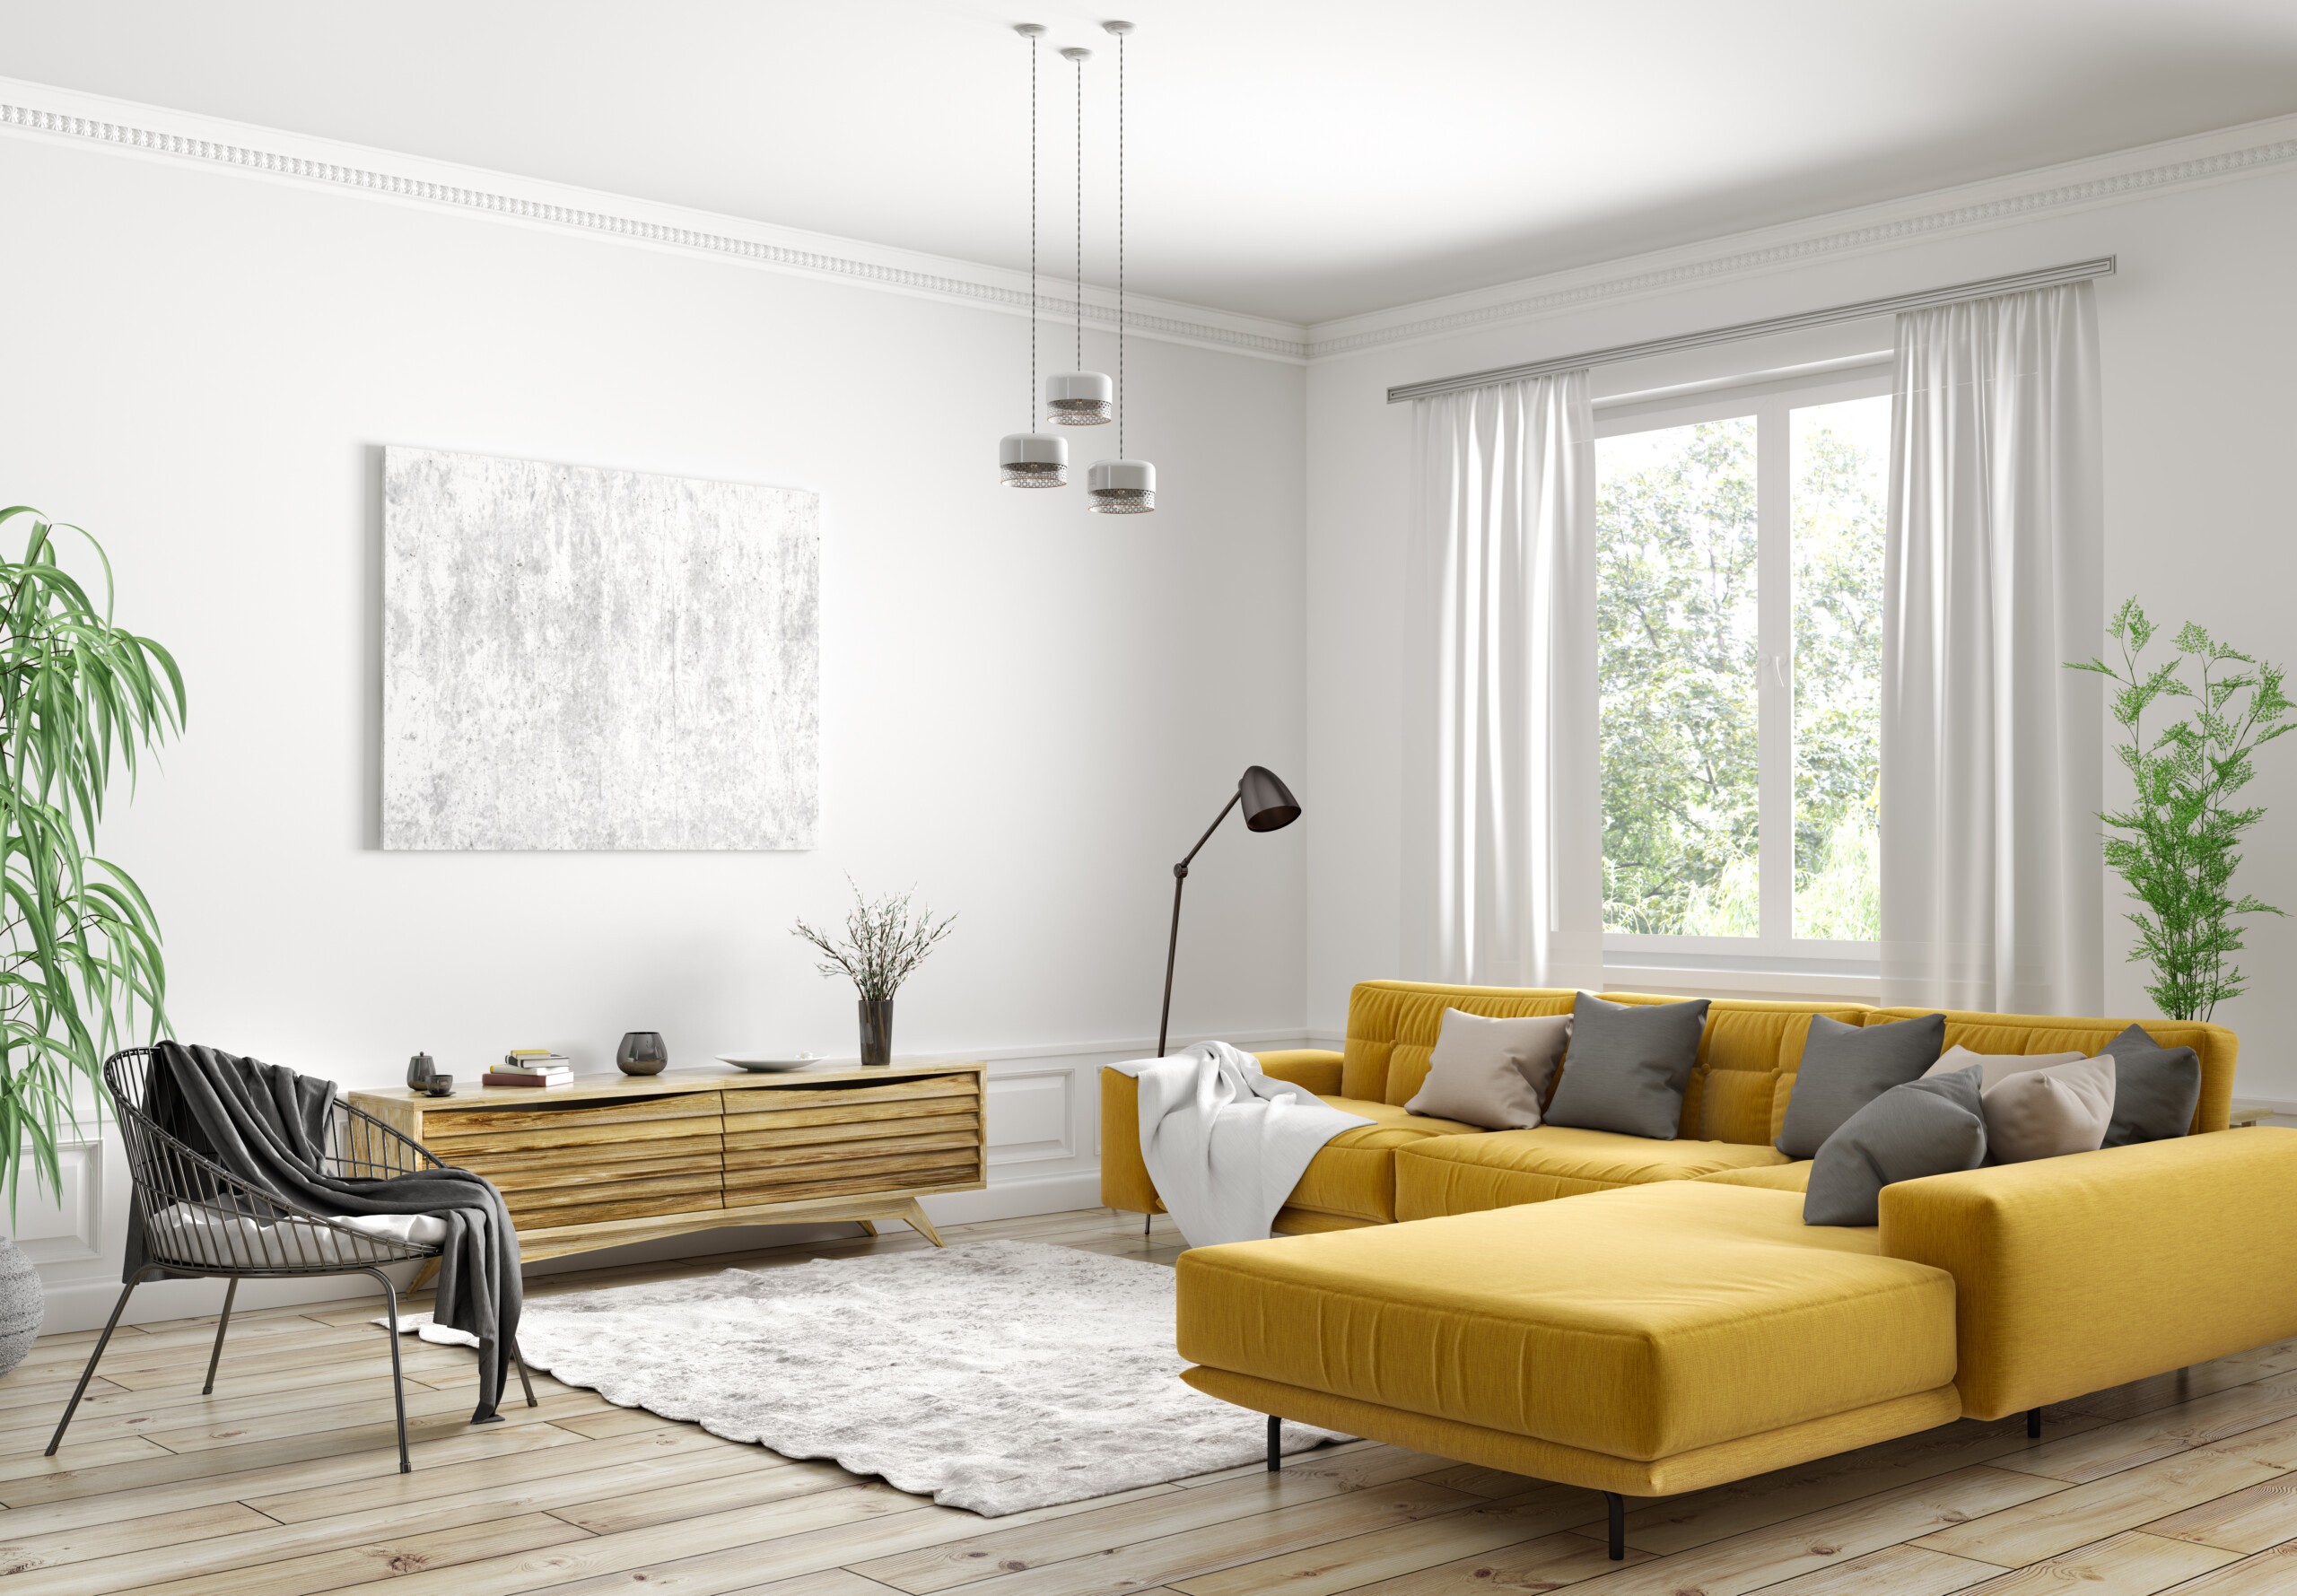 Interior design of modern scandinavian apartment